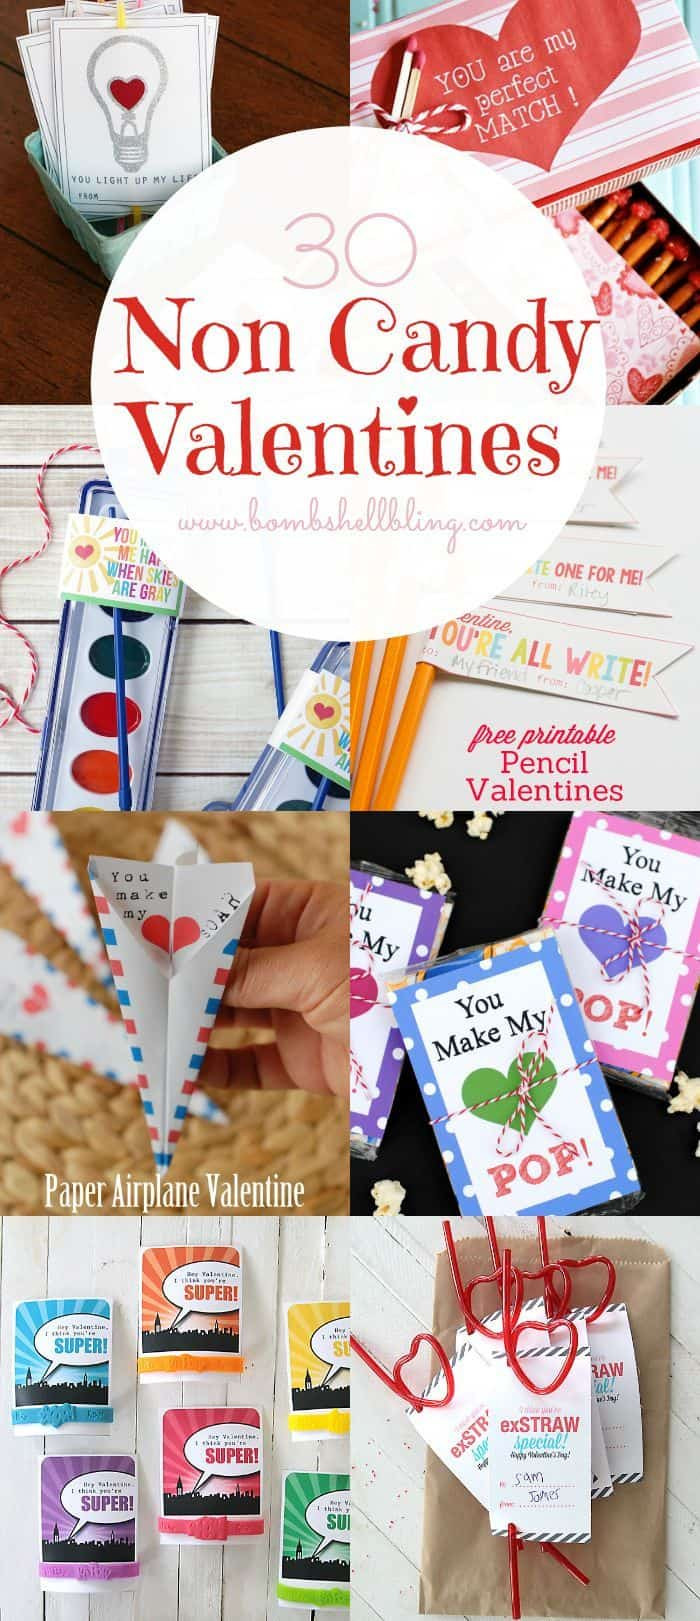 Child Valentine Gift Ideas
 Non Candy Valentine s Day Gift Ideas for Kids